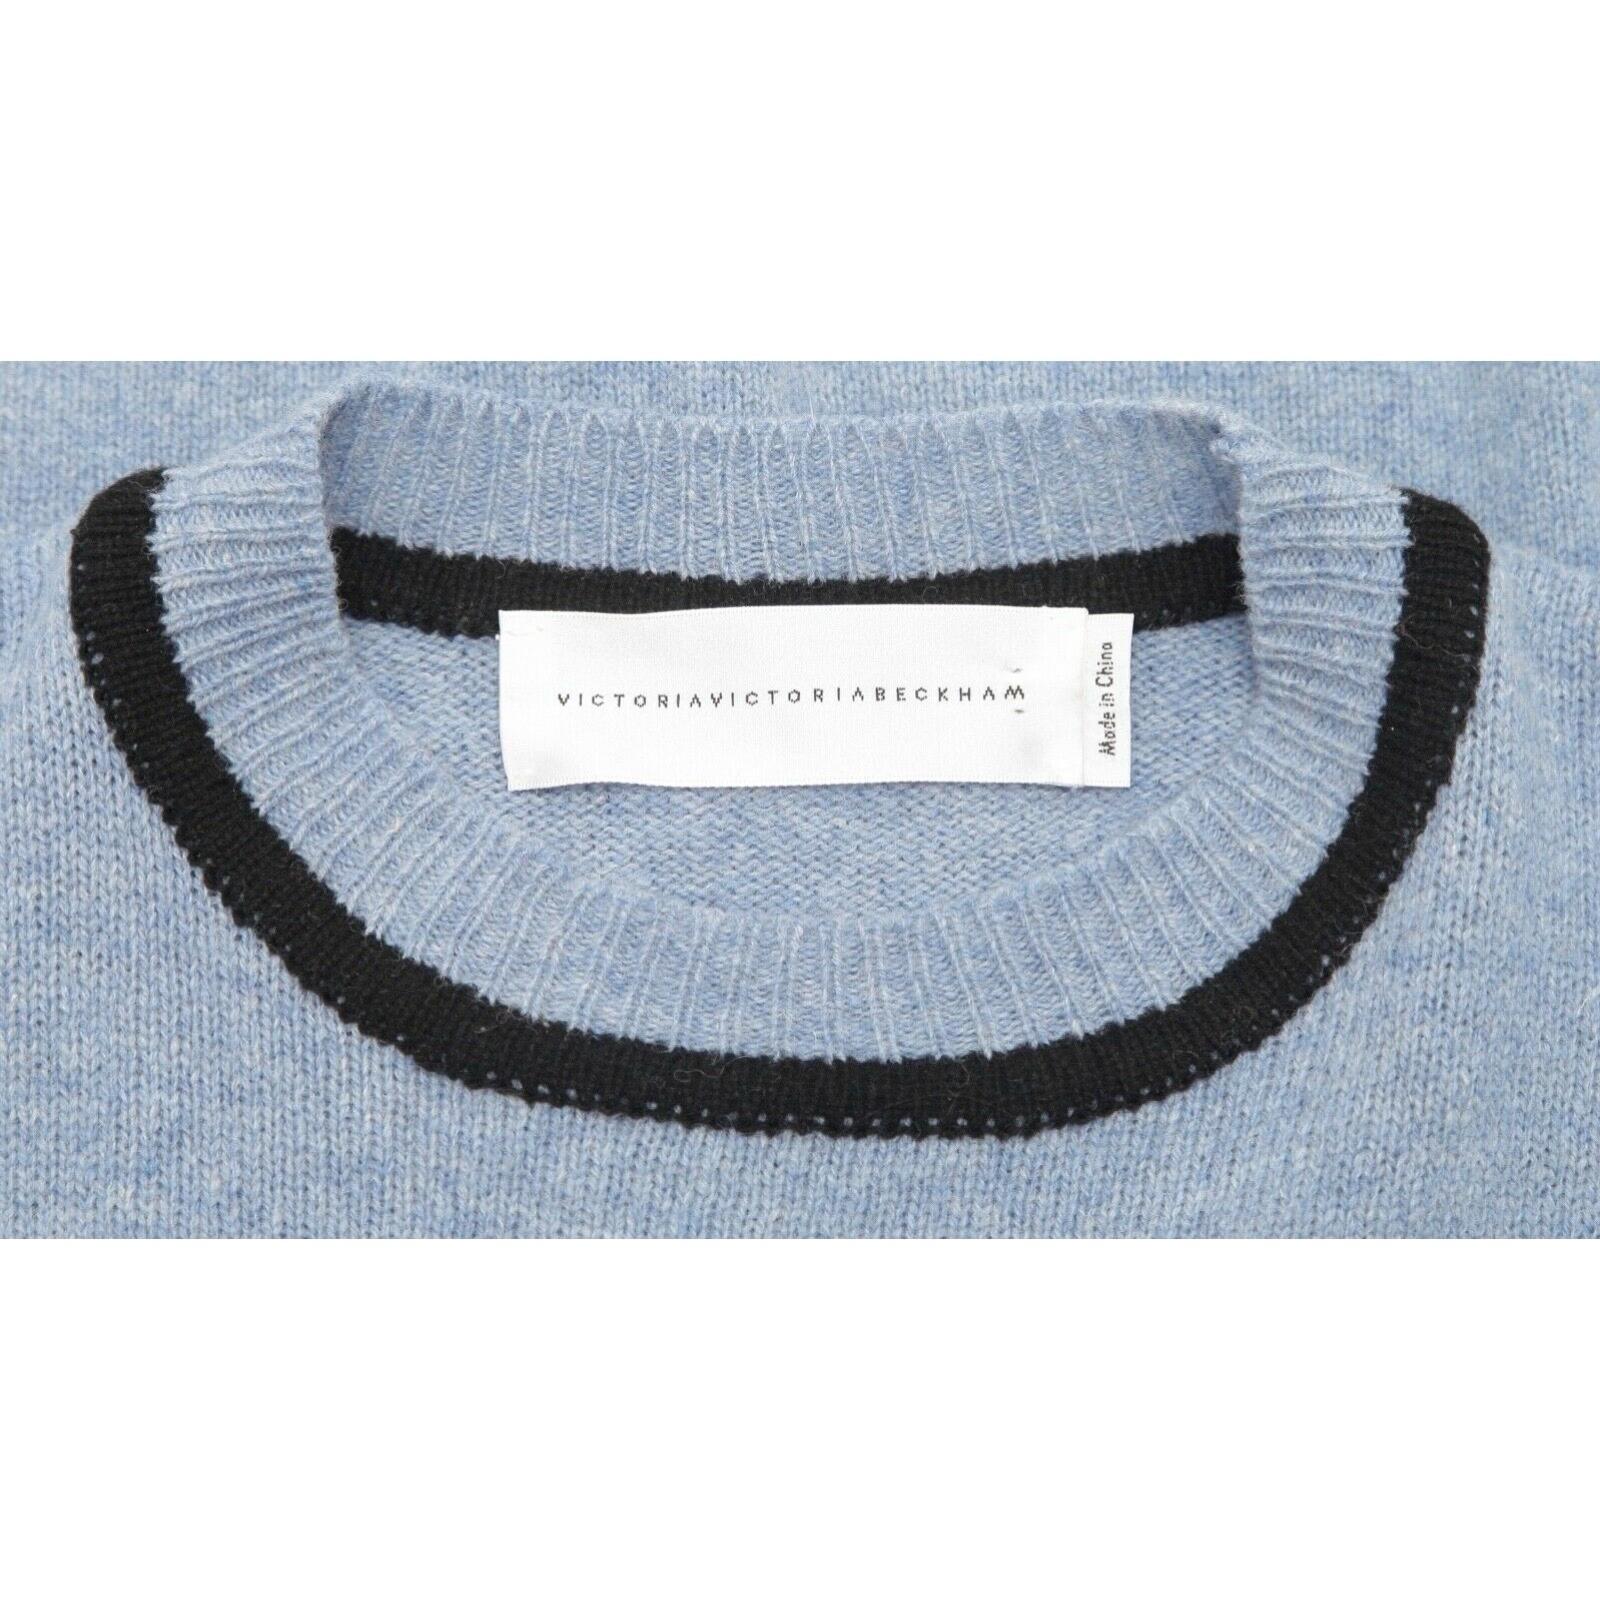 VICTORIA VICTORA BECKHAM Sweater Long Sleeve Animal Blue Black Wool Sz XS For Sale 3